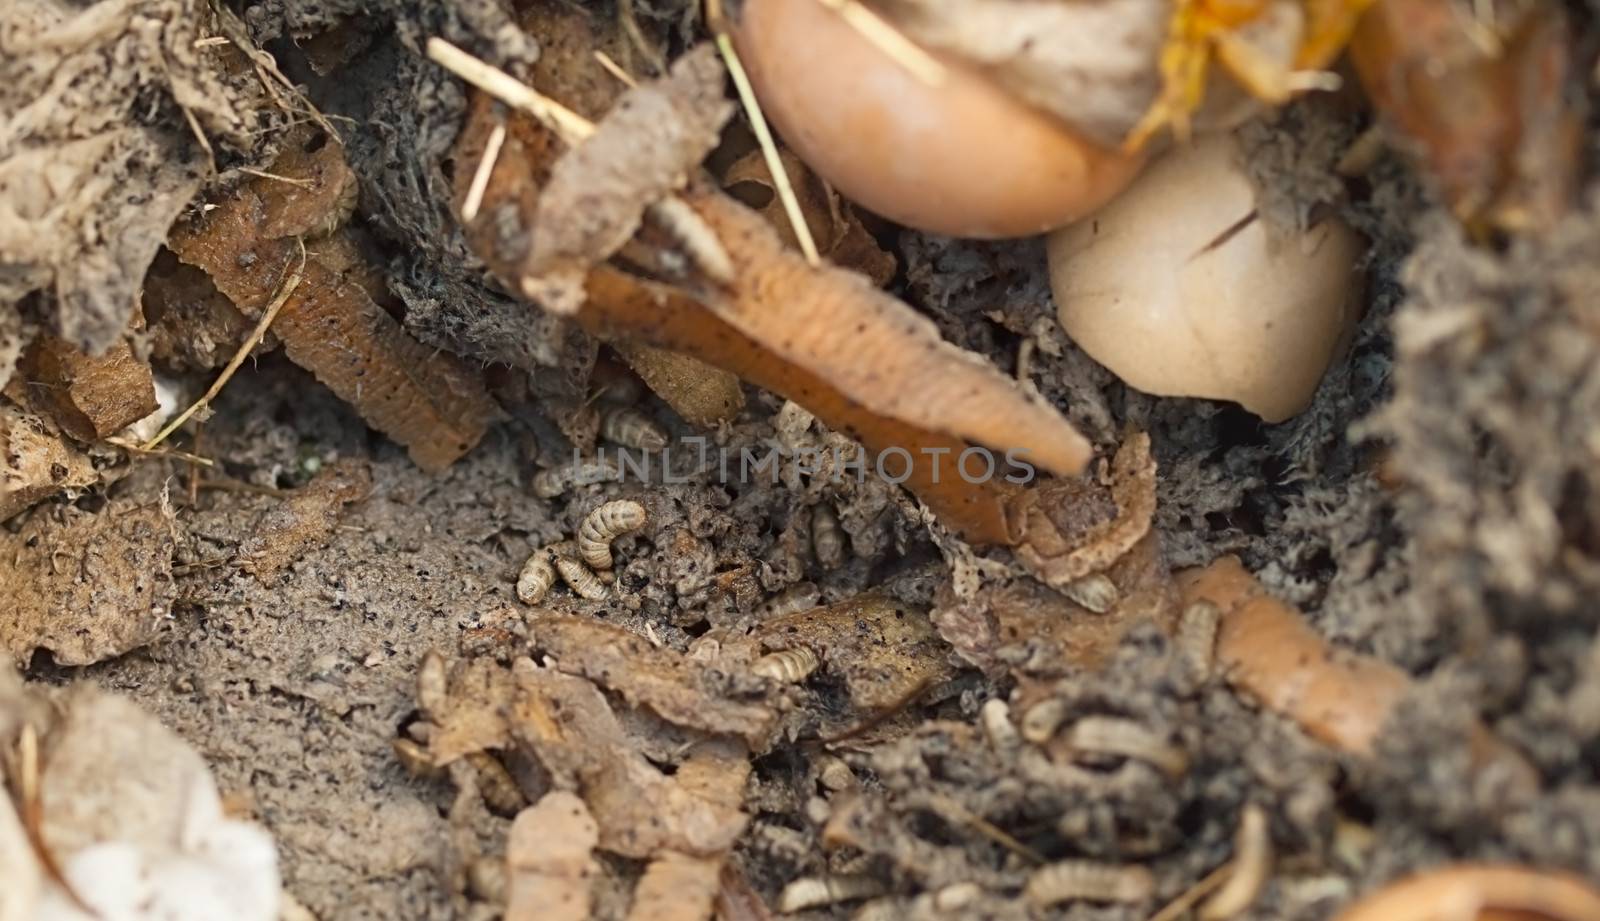 maggot grubs decomposing food and vegetable scraps in compost bin 